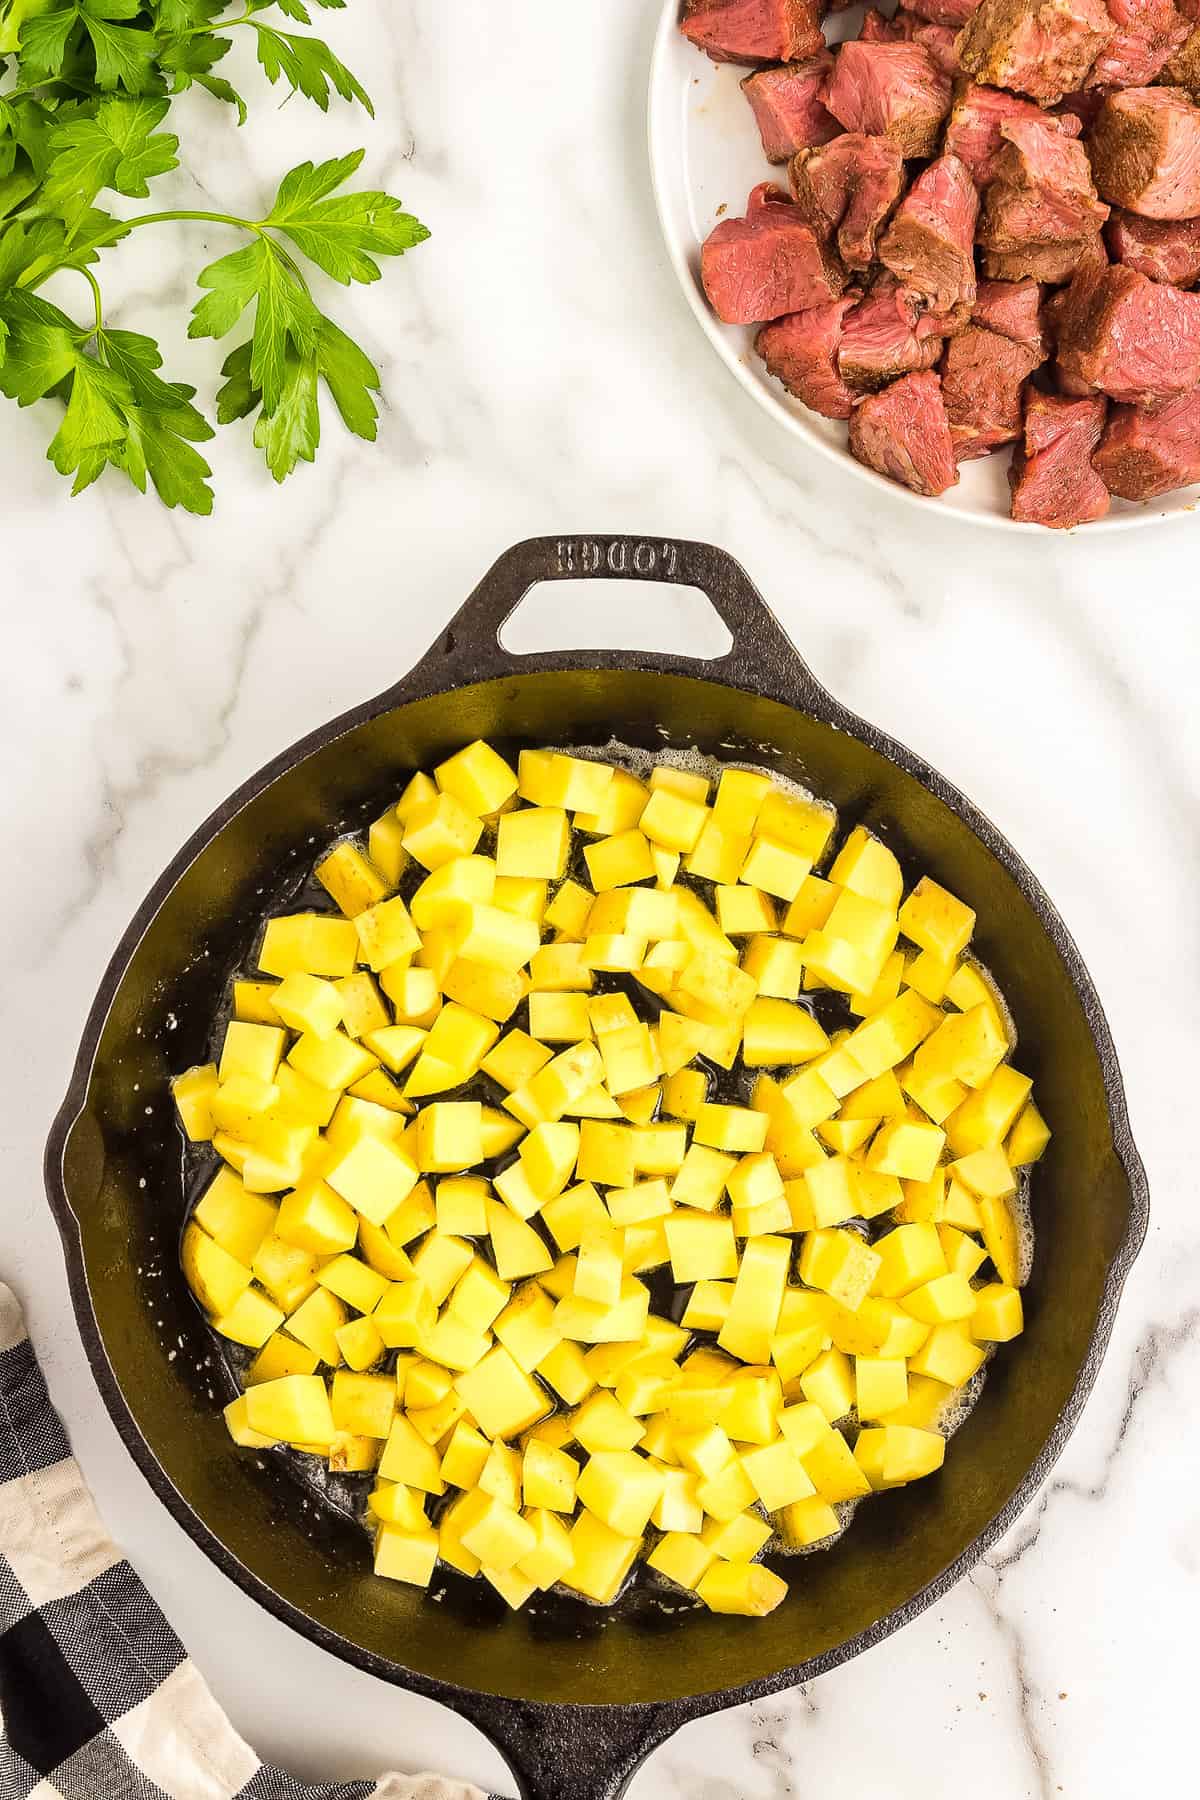 Cast iron pan with small potato pieces